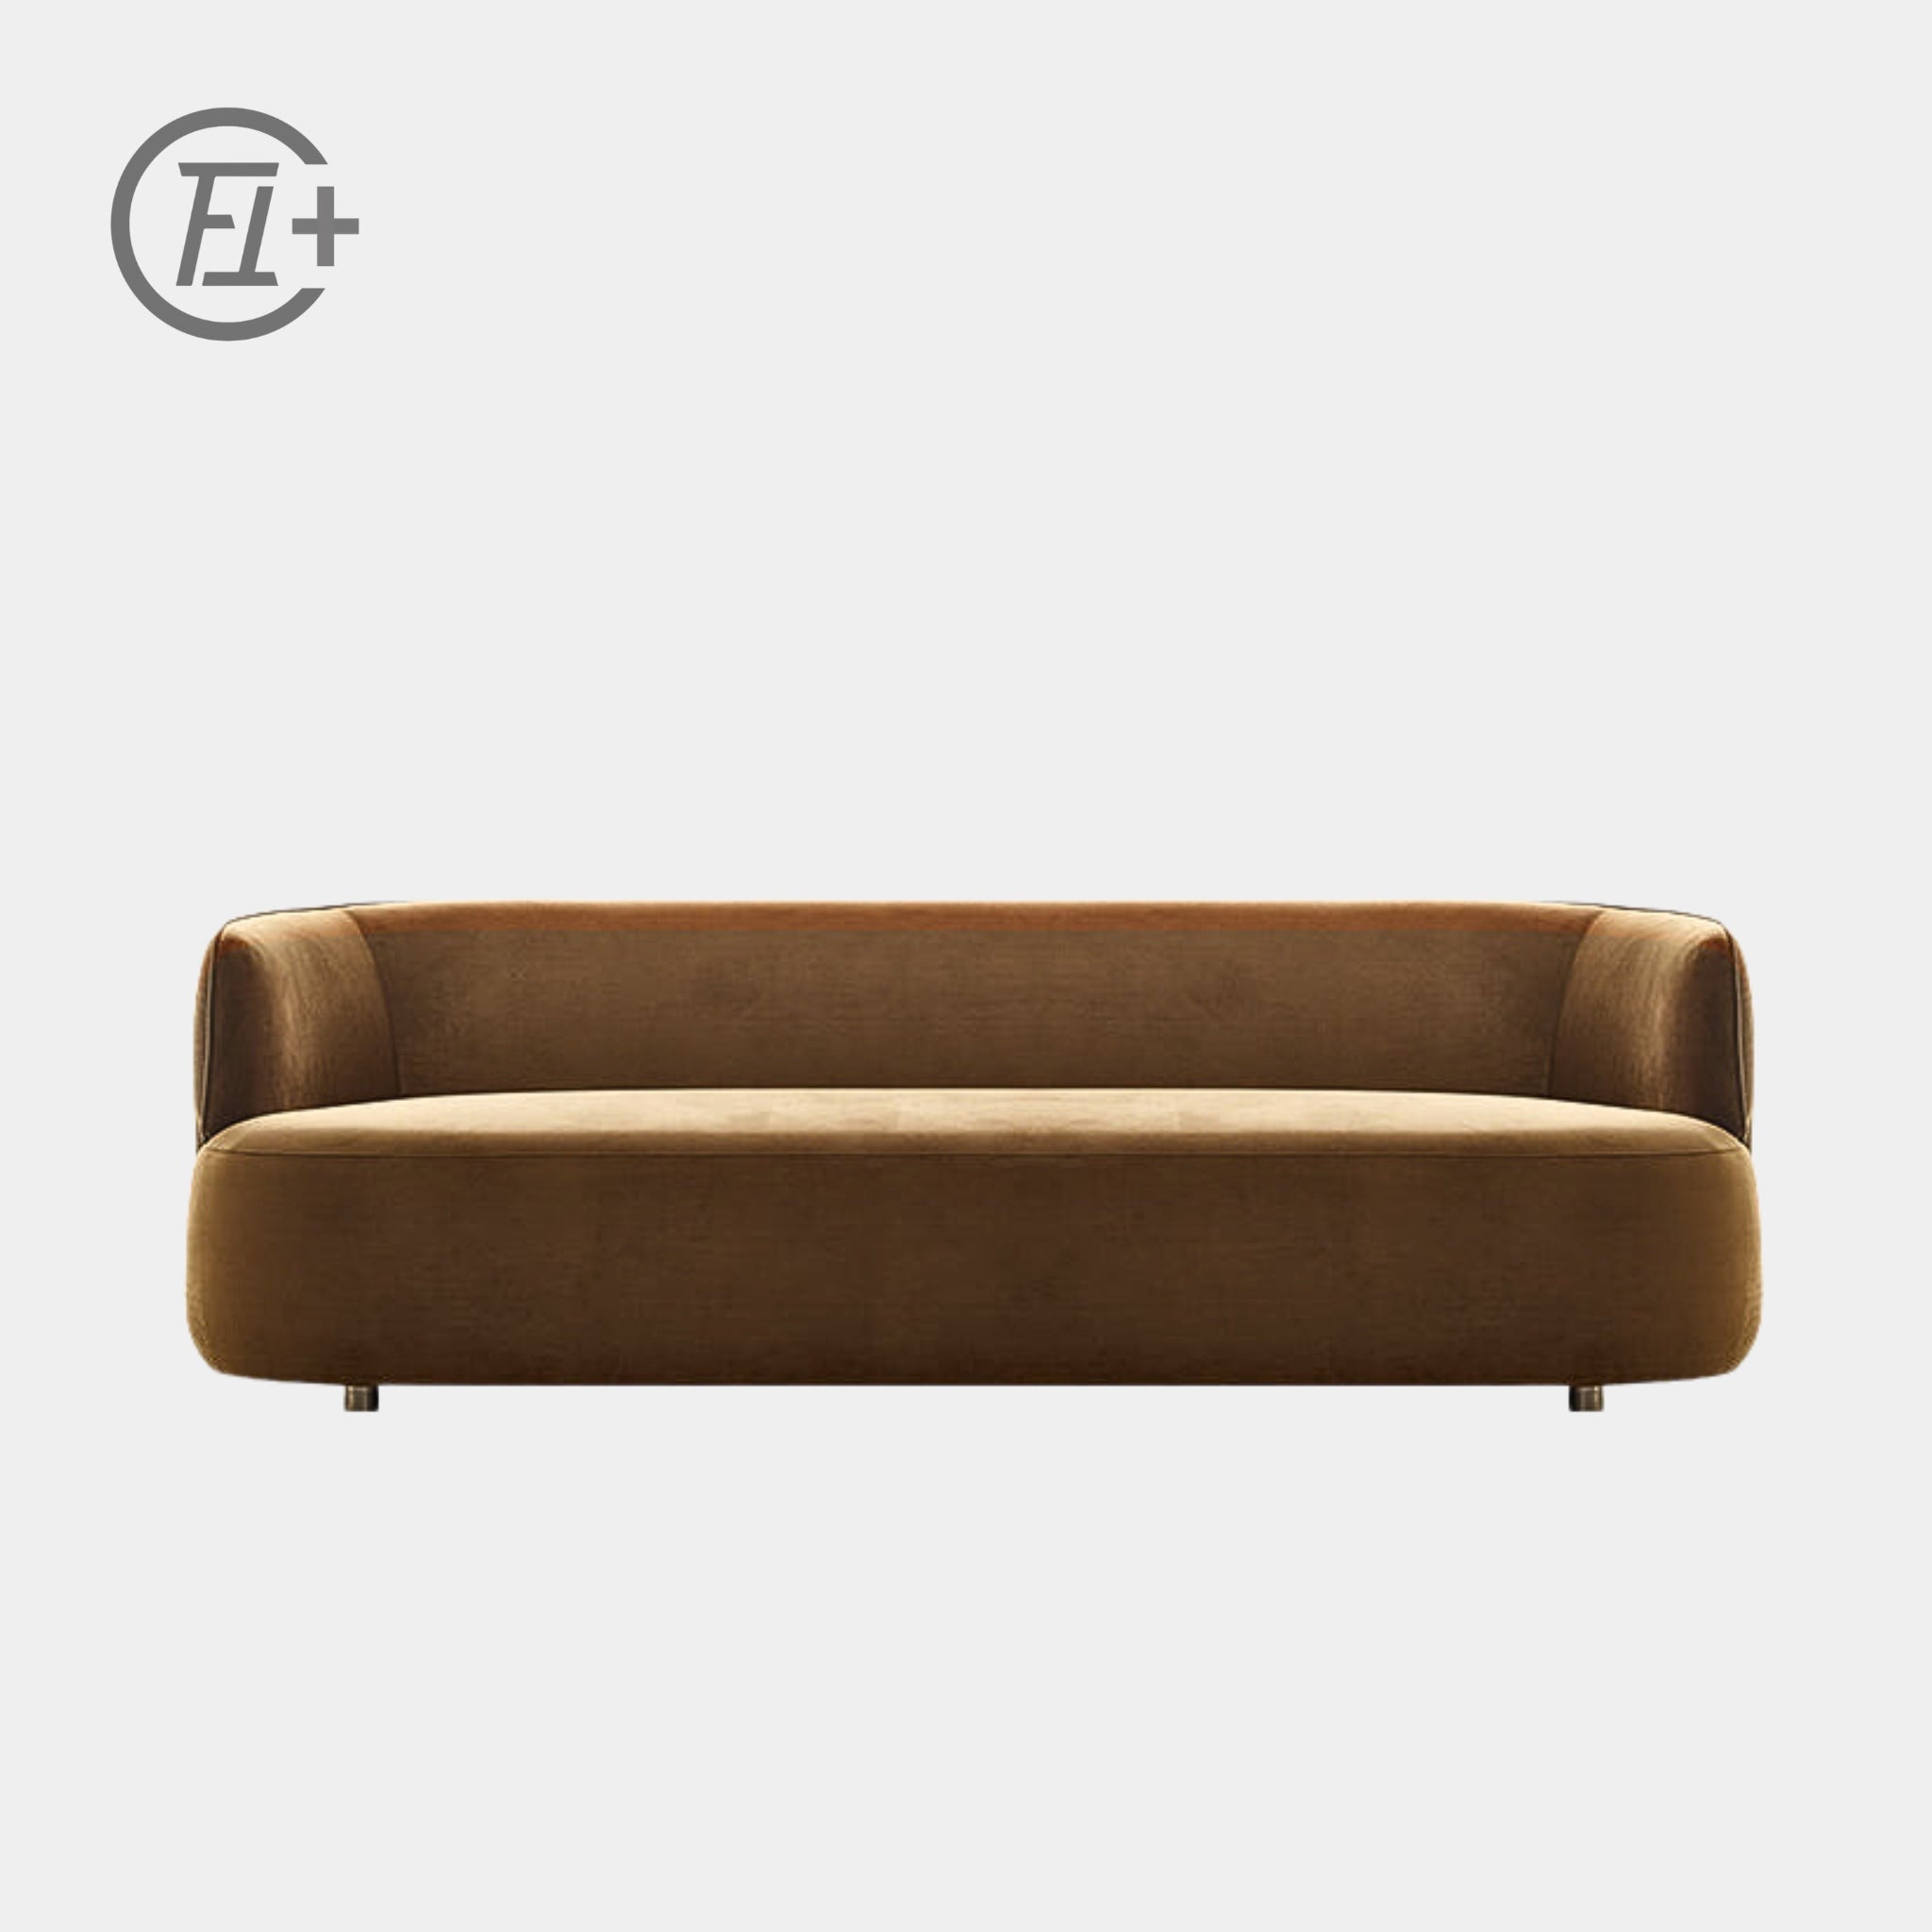 The Feelter Heb Sofa